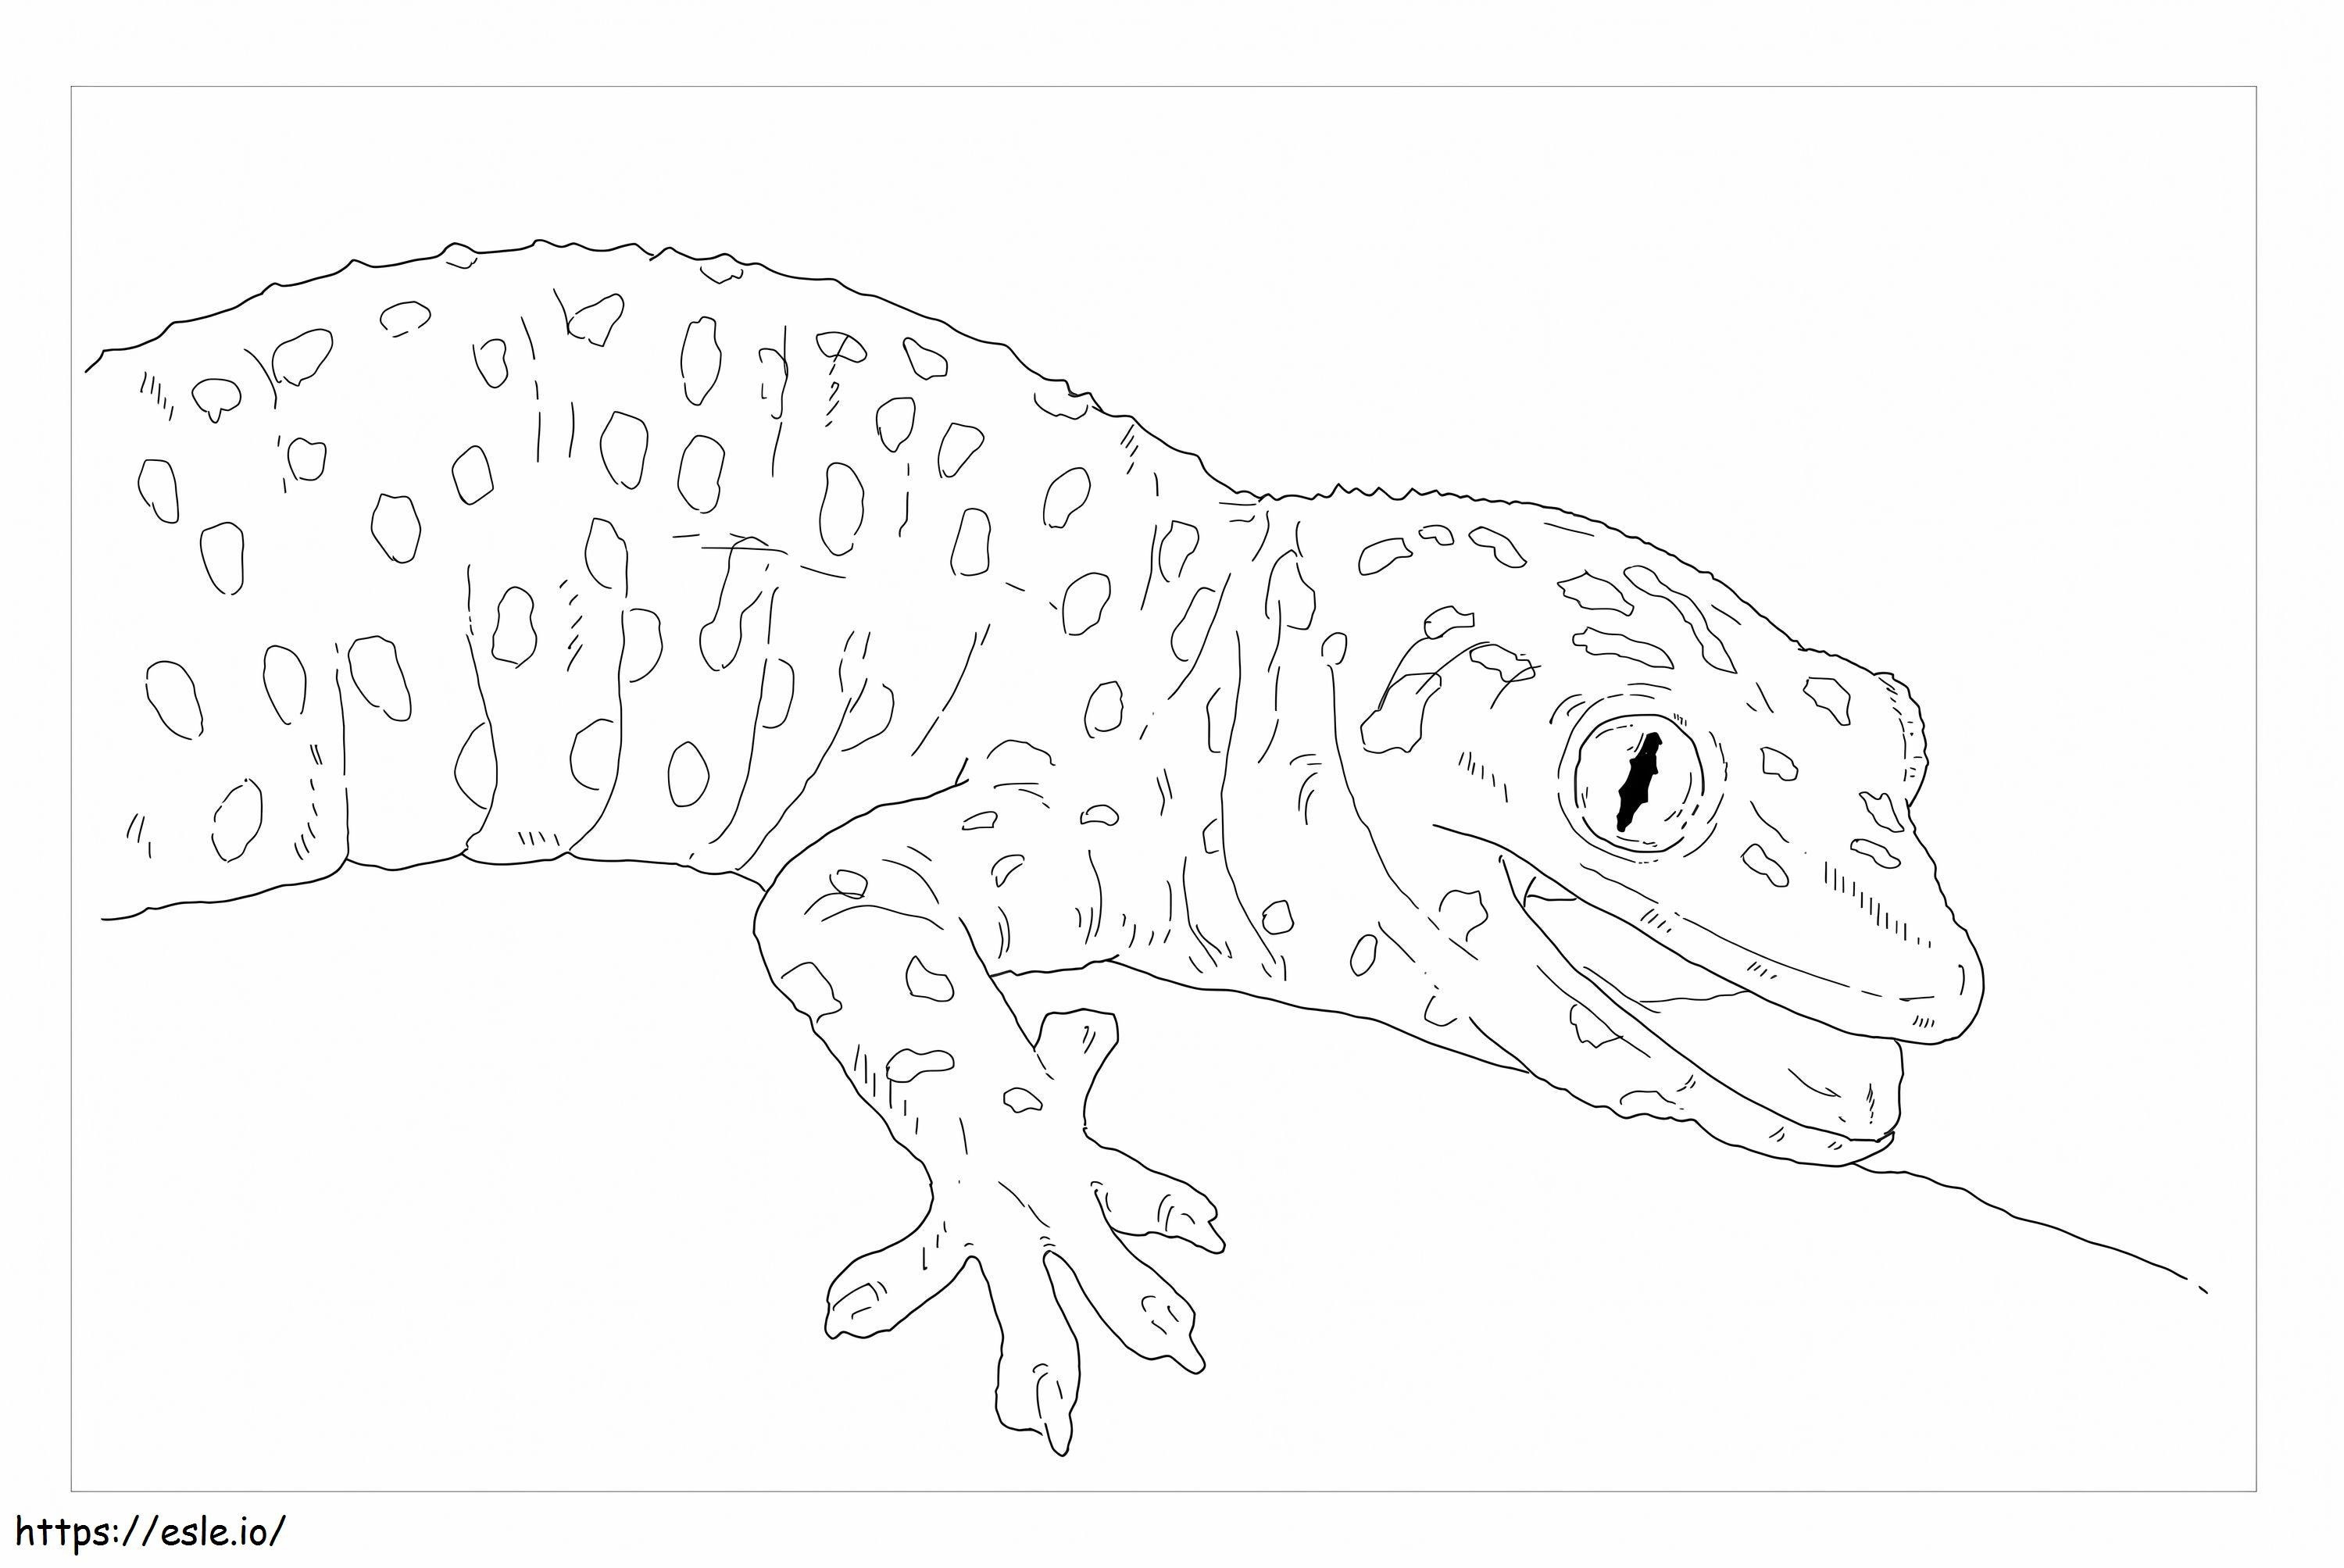 Tokay Gecko coloring page